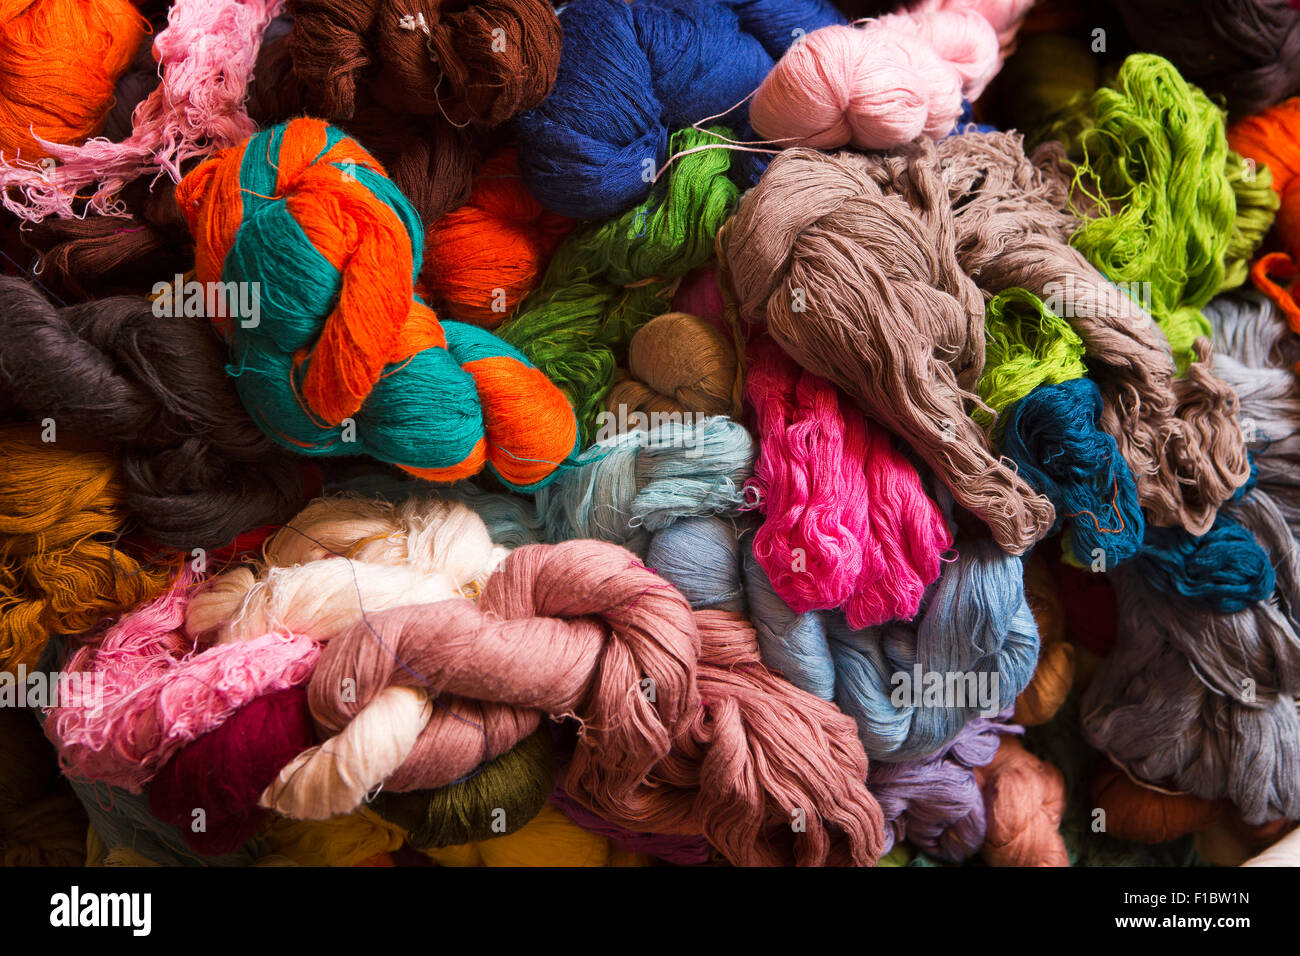 India, Jammu & Kashmir, Srinagar, colourful pashmina embroiderery threads Stock Photo